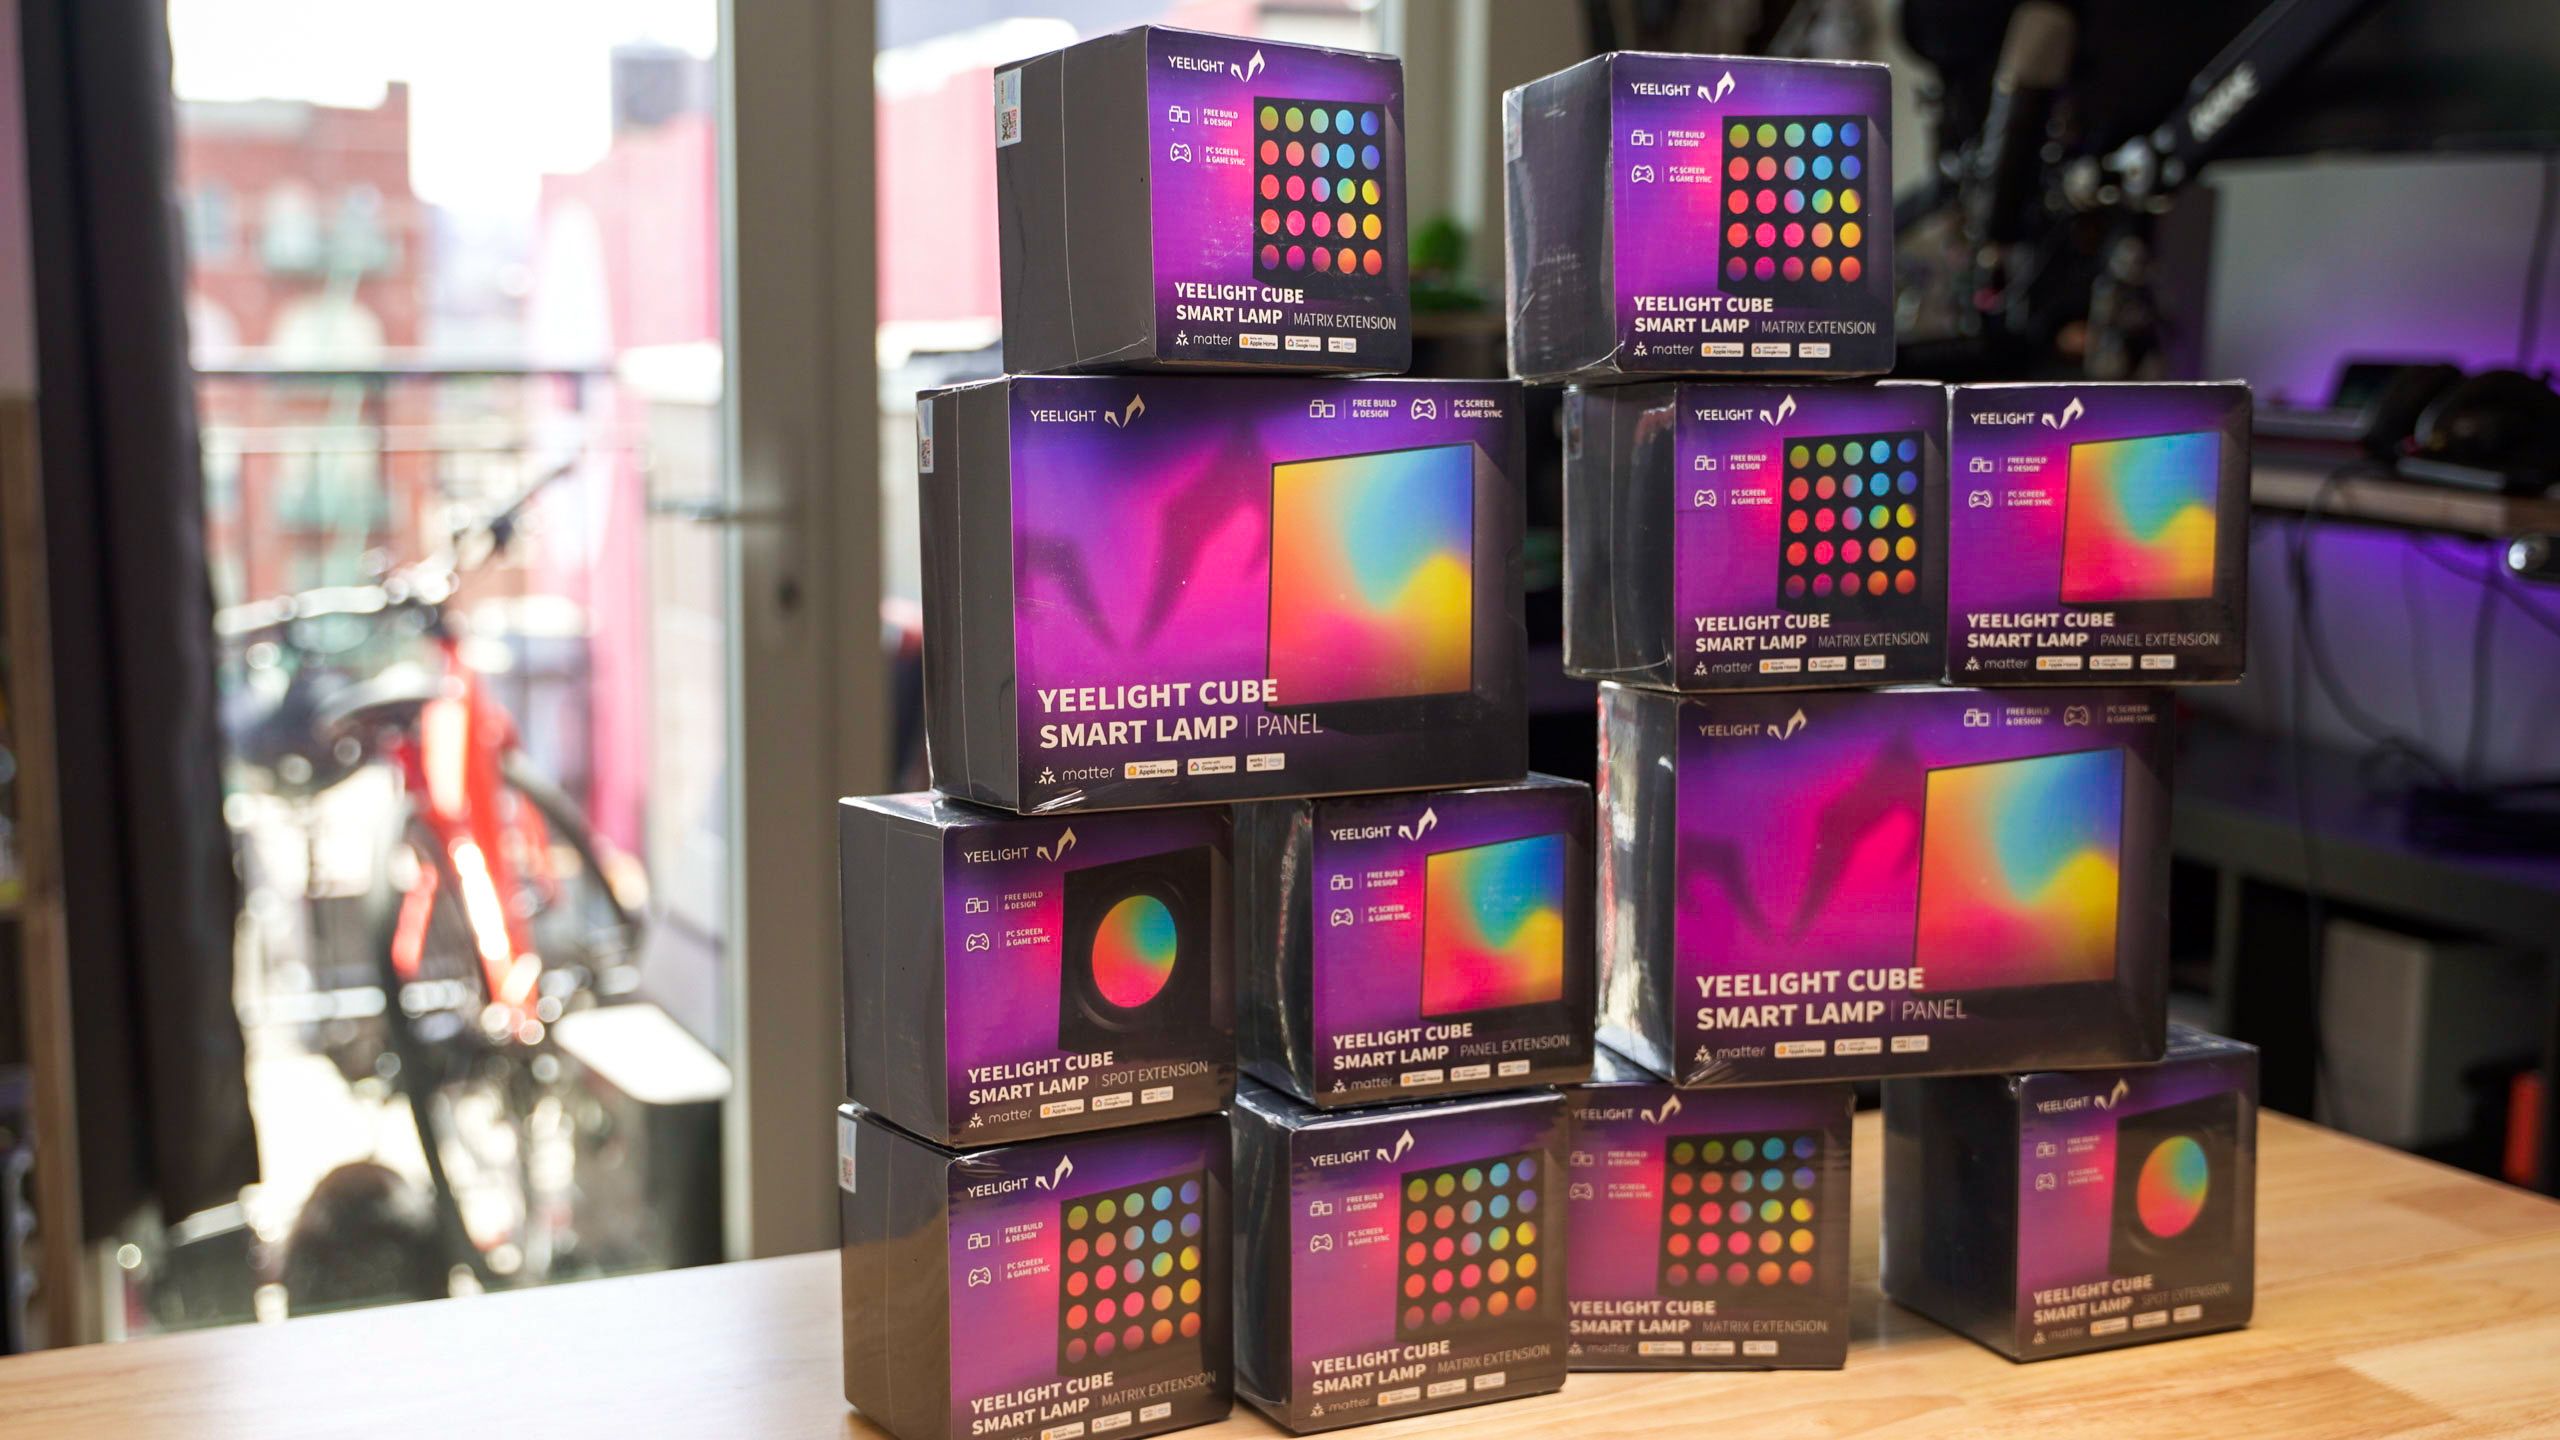 Yeelight Cube: Modular, Customizable RGB Table Lamps